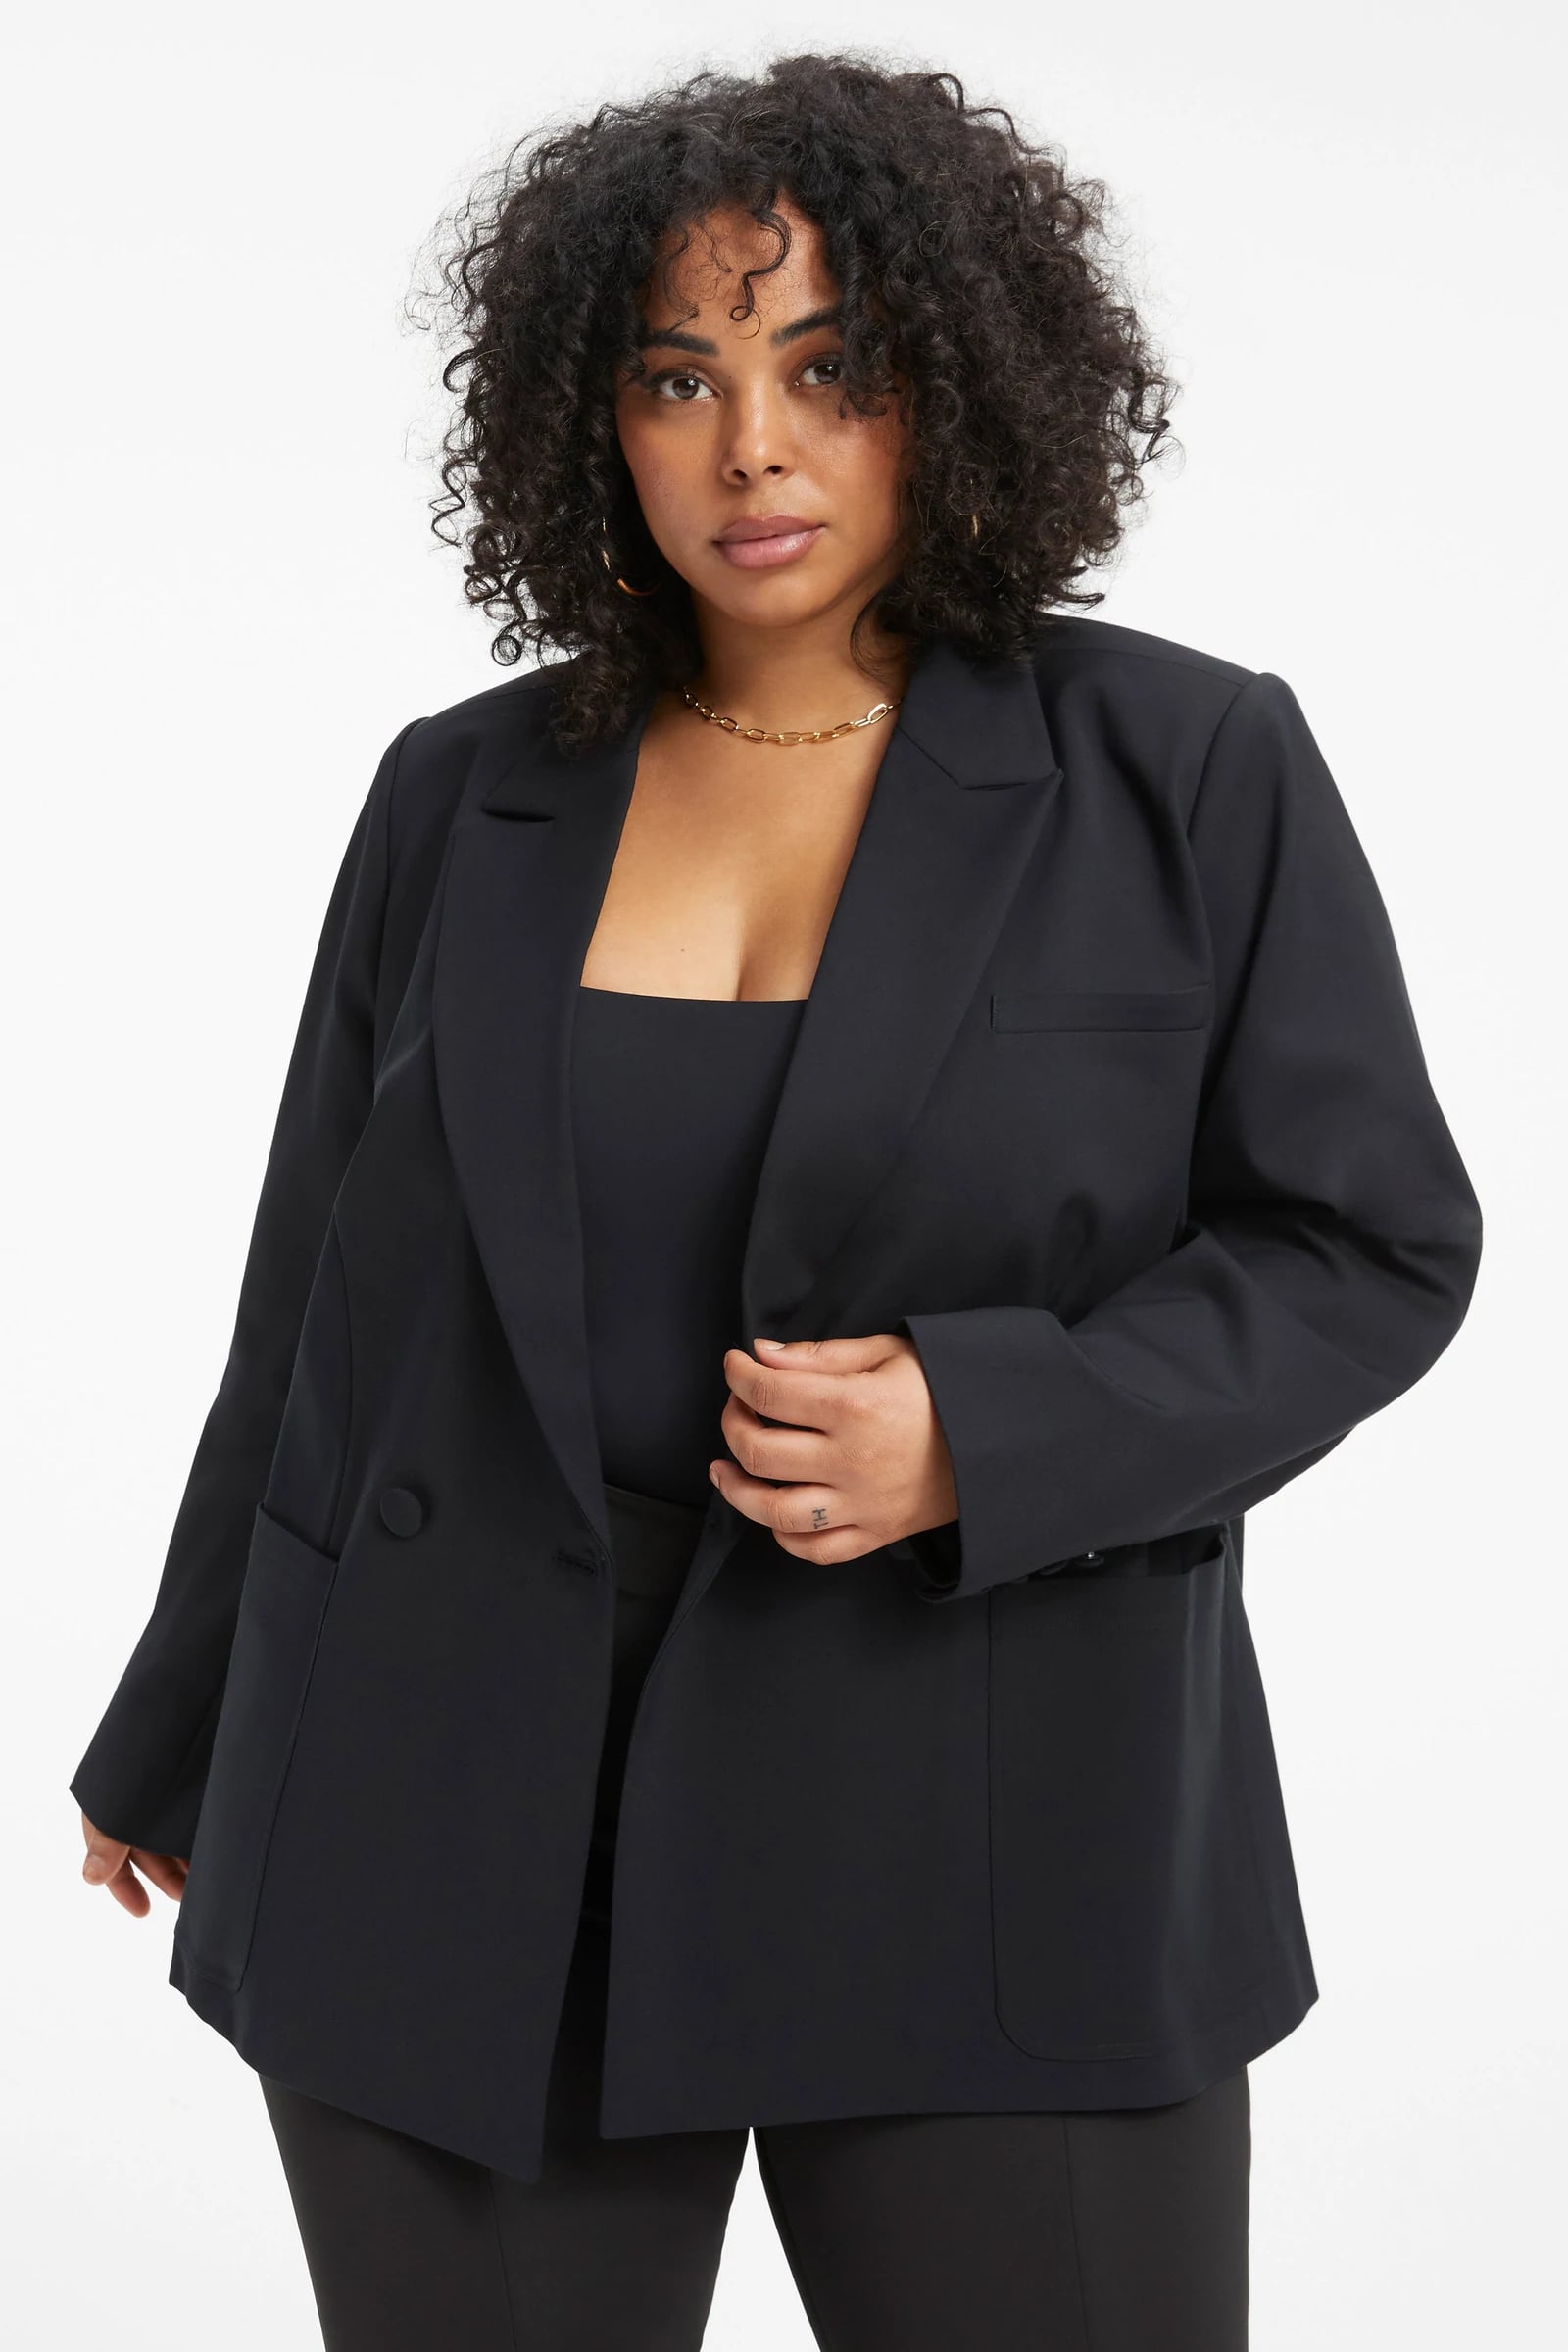 Sleek Work-Friendly Plus Size Suits For Curvy Women